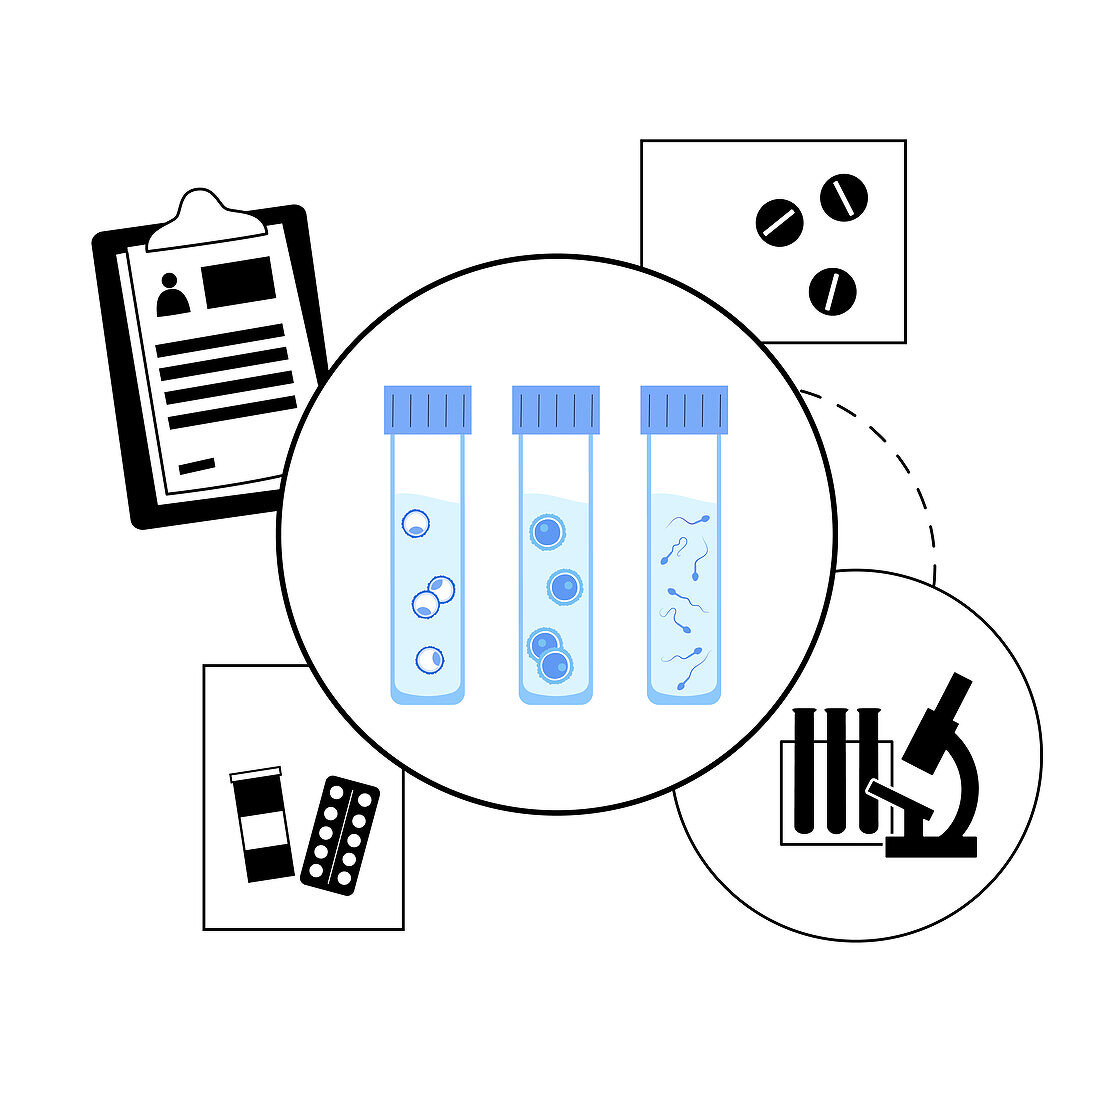 IVF specimen collection, conceptual illustration